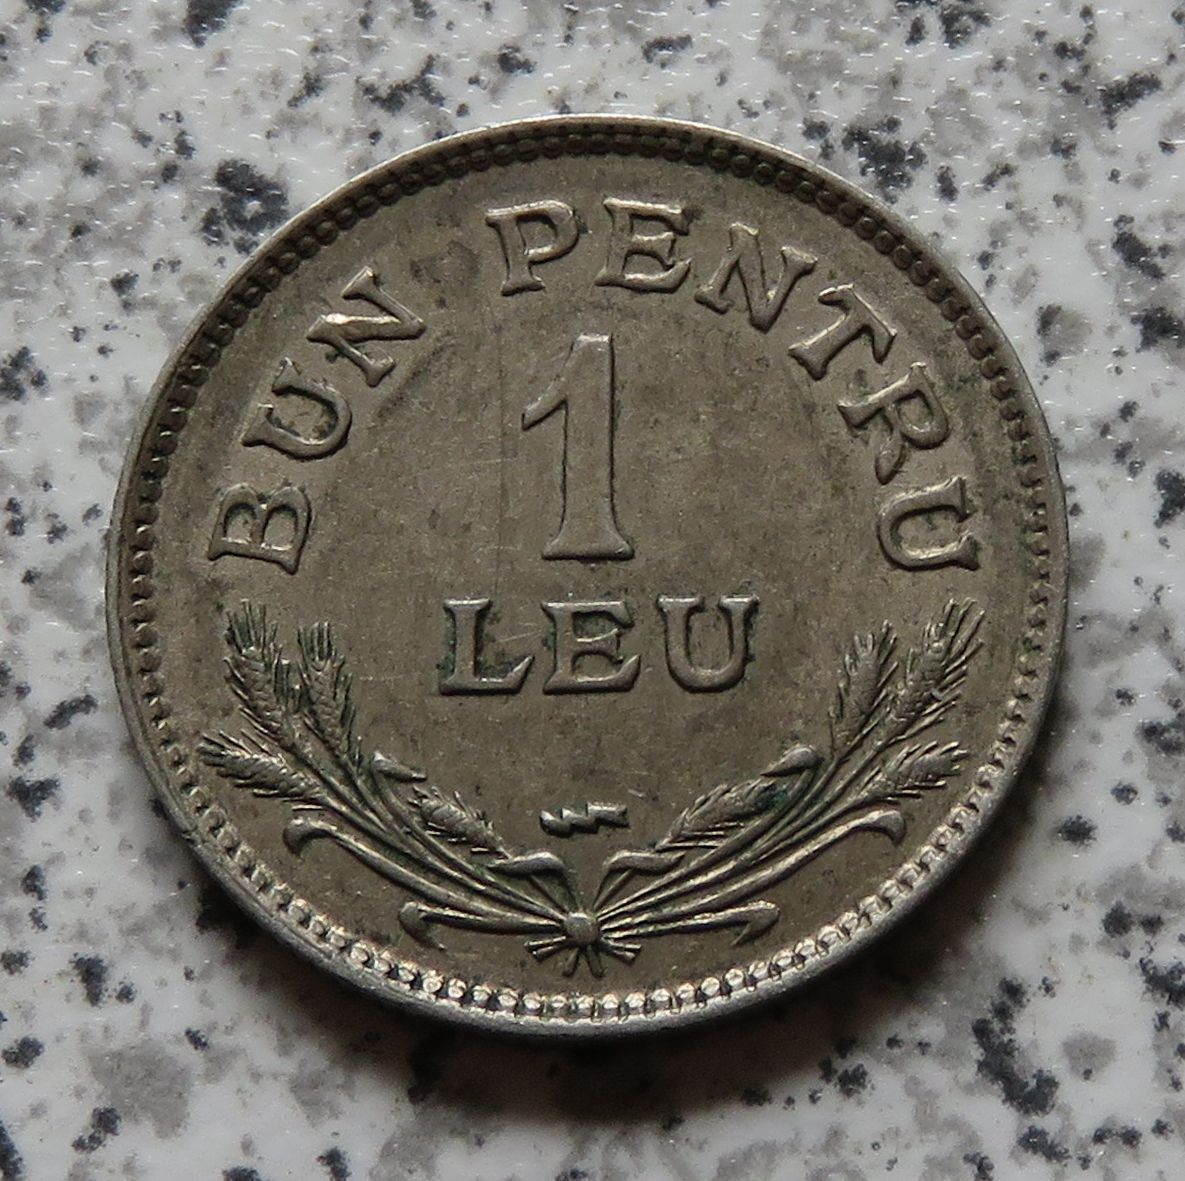  Rumänien 1 Leu 1924   